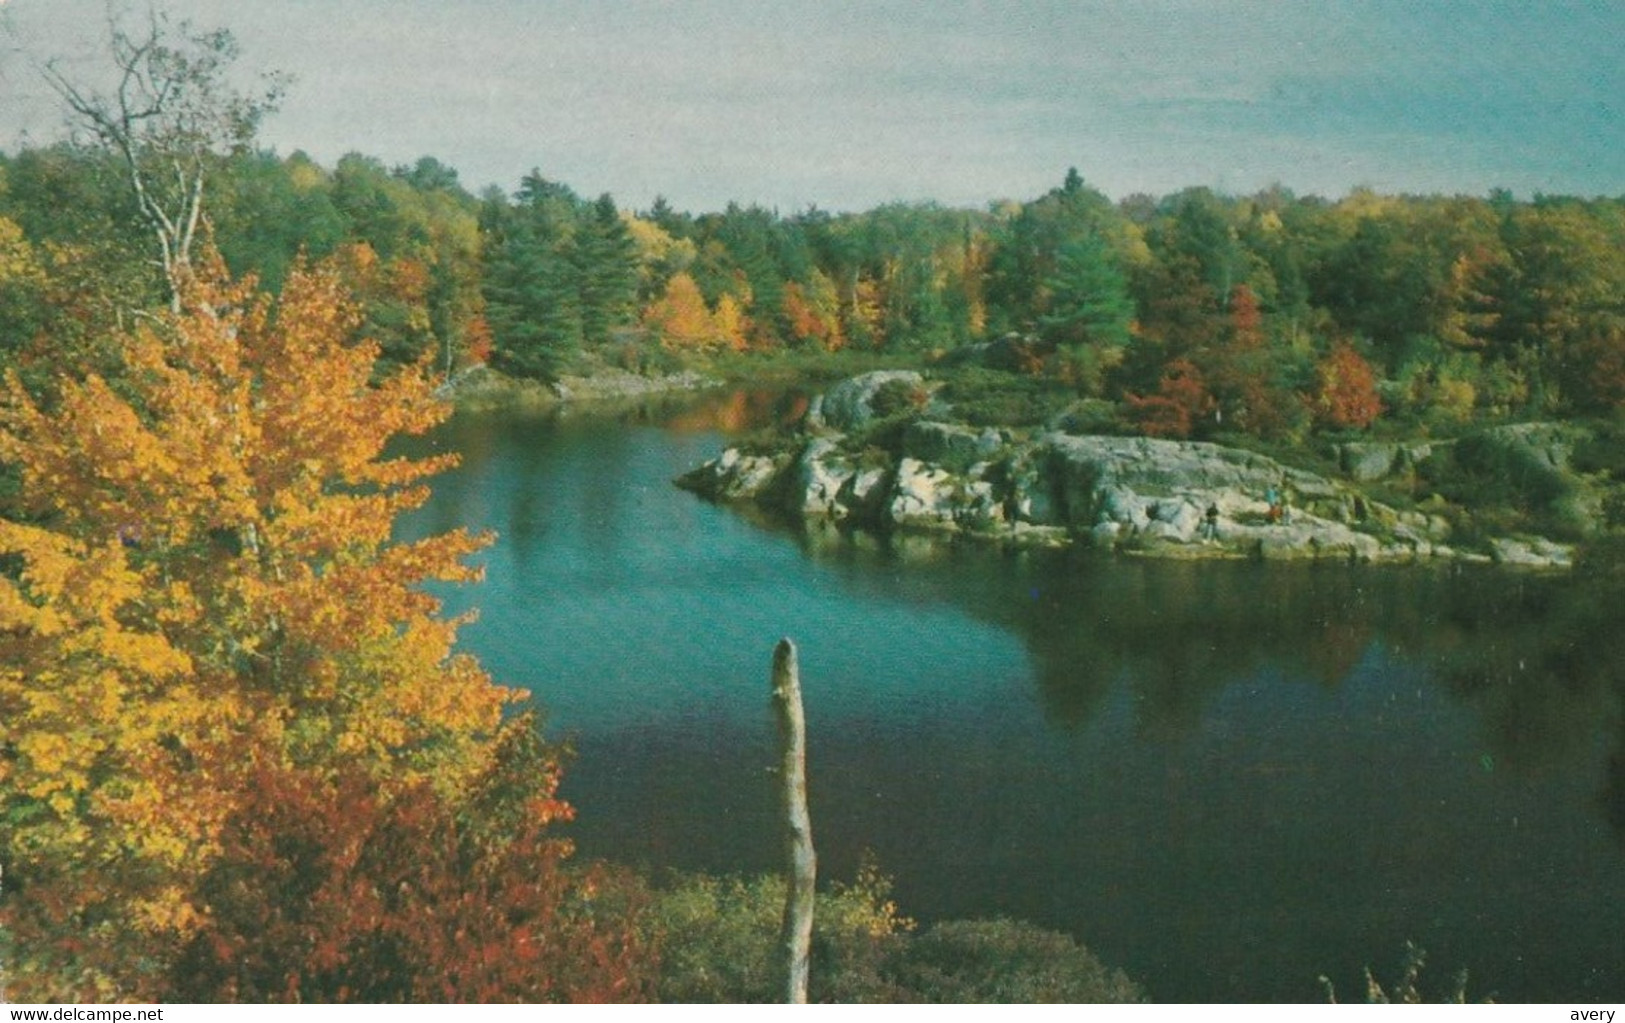 The McDonald River In The Beautiful Muskoka-Georgian Bay Region, Ontario - Muskoka